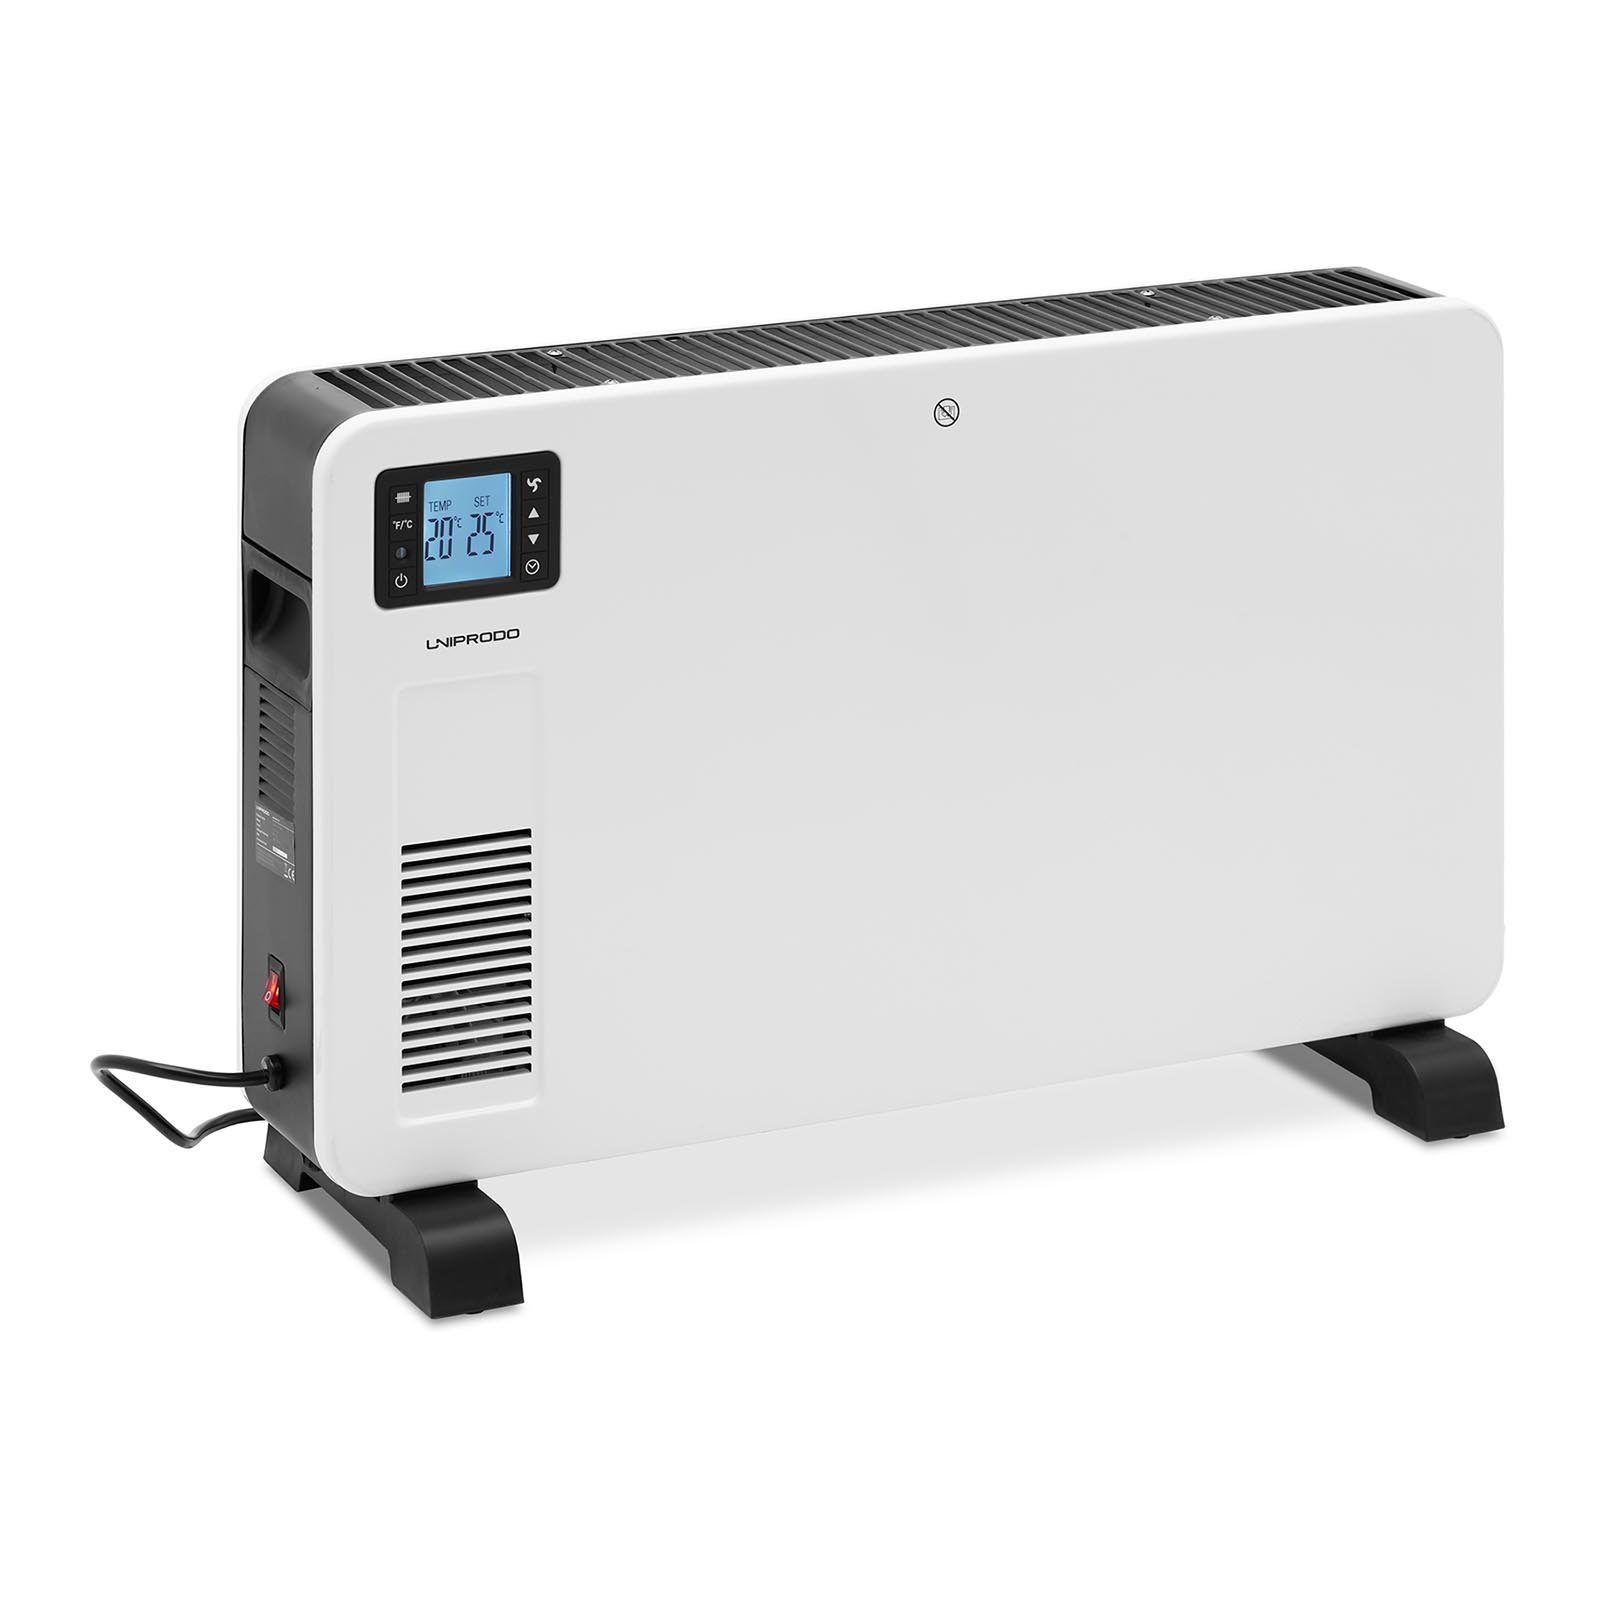 Uniprodo Konvektor Konvektorheizung Elektroheizung 2300 W 5 - 37 °C 25 m² Timer LCD